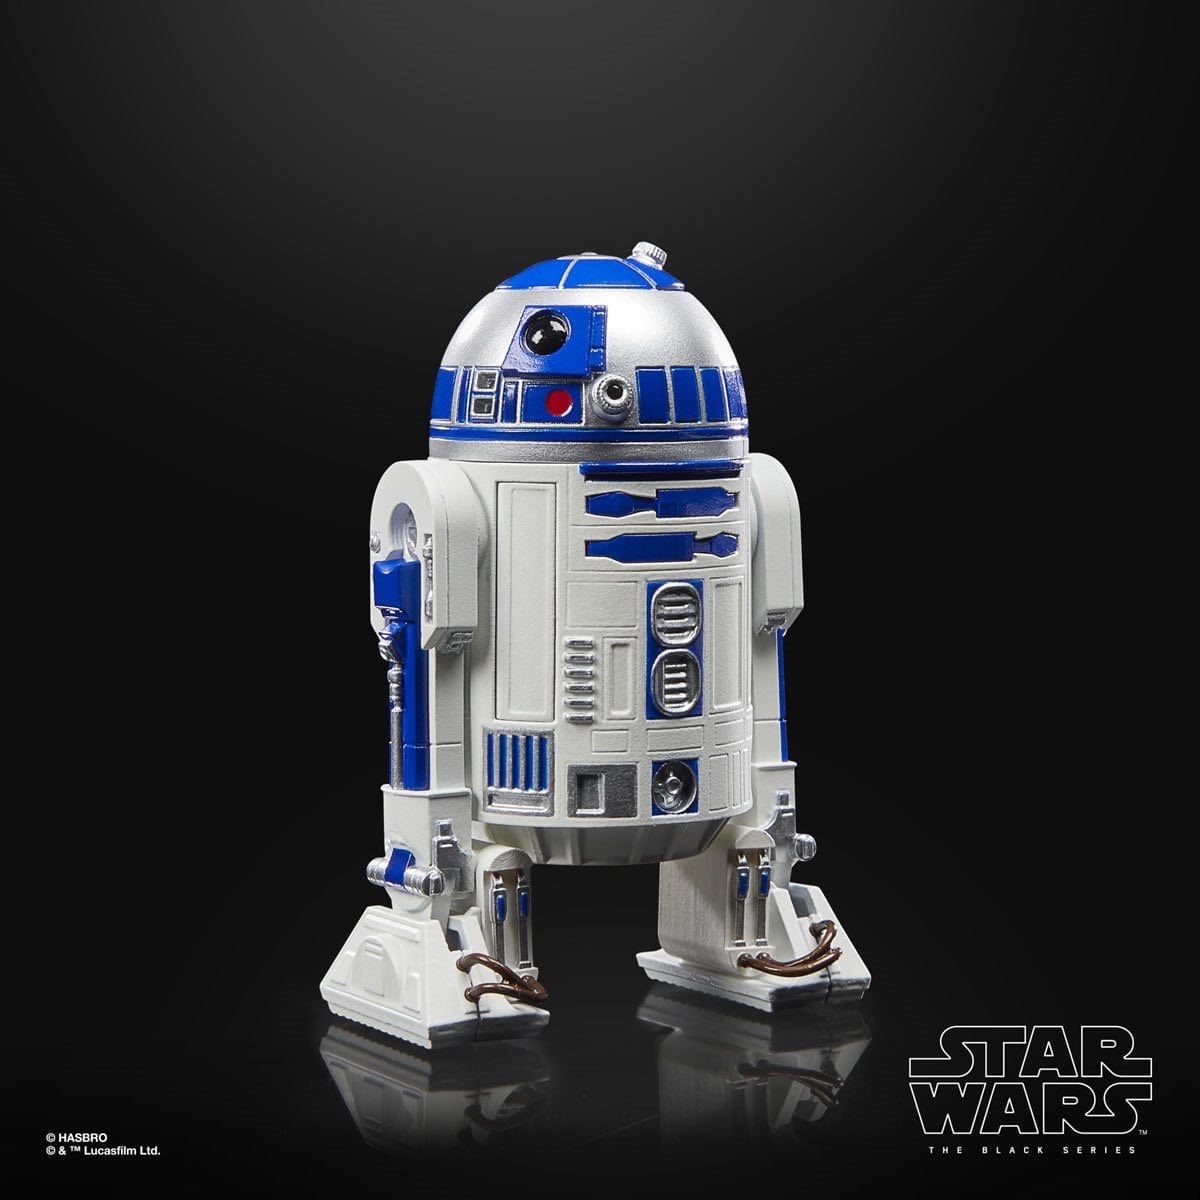 Star Wars The Black Series Return of the Jedi 40th Anniversary 6-Inch R2-D2 (Artoo-Deetoo) Action Figure photo